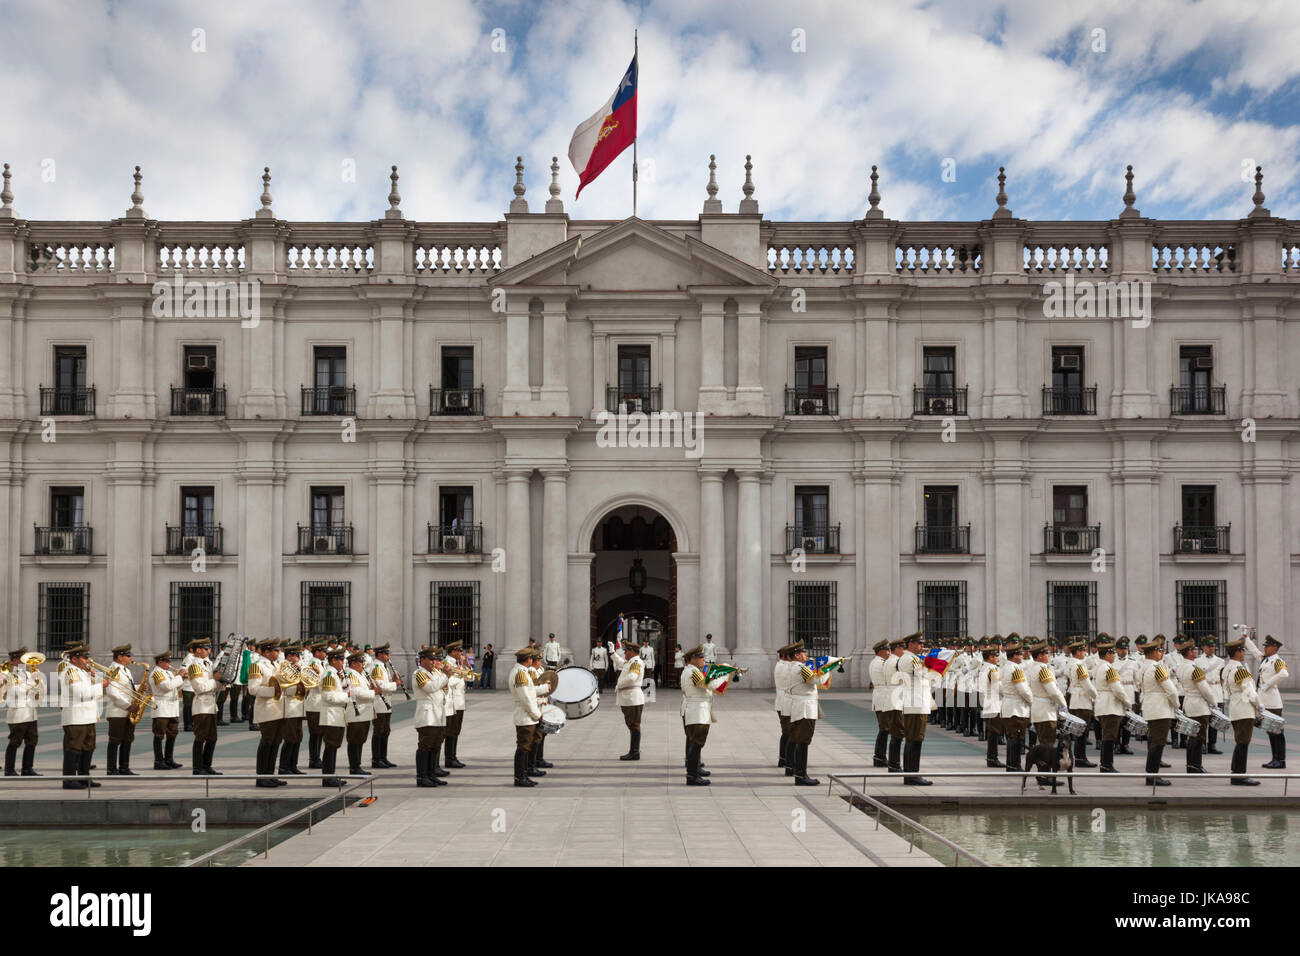 Chile, Santiago, Palacio de la Moneda, Presidential Palace, changing of the guards ceremony Stock Photo